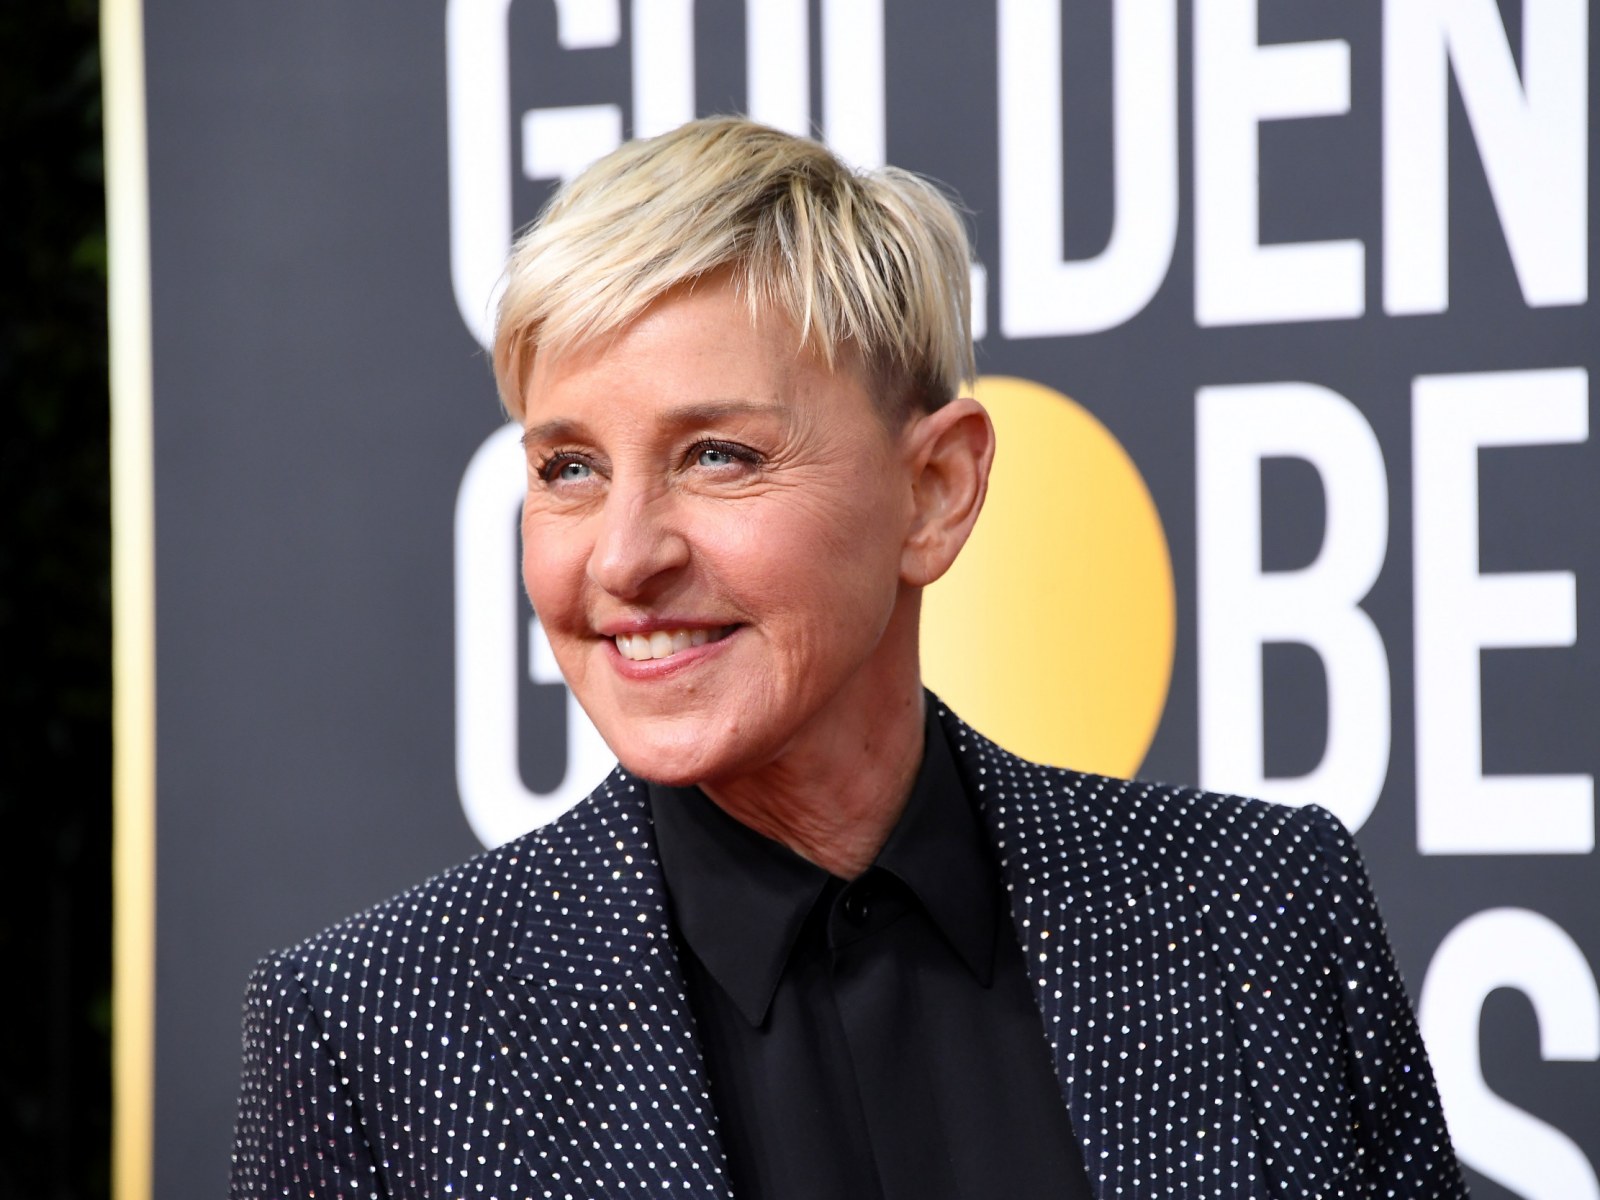 Every Celebrity to Accuse Ellen DeGeneres Show of Toxic Work Culture